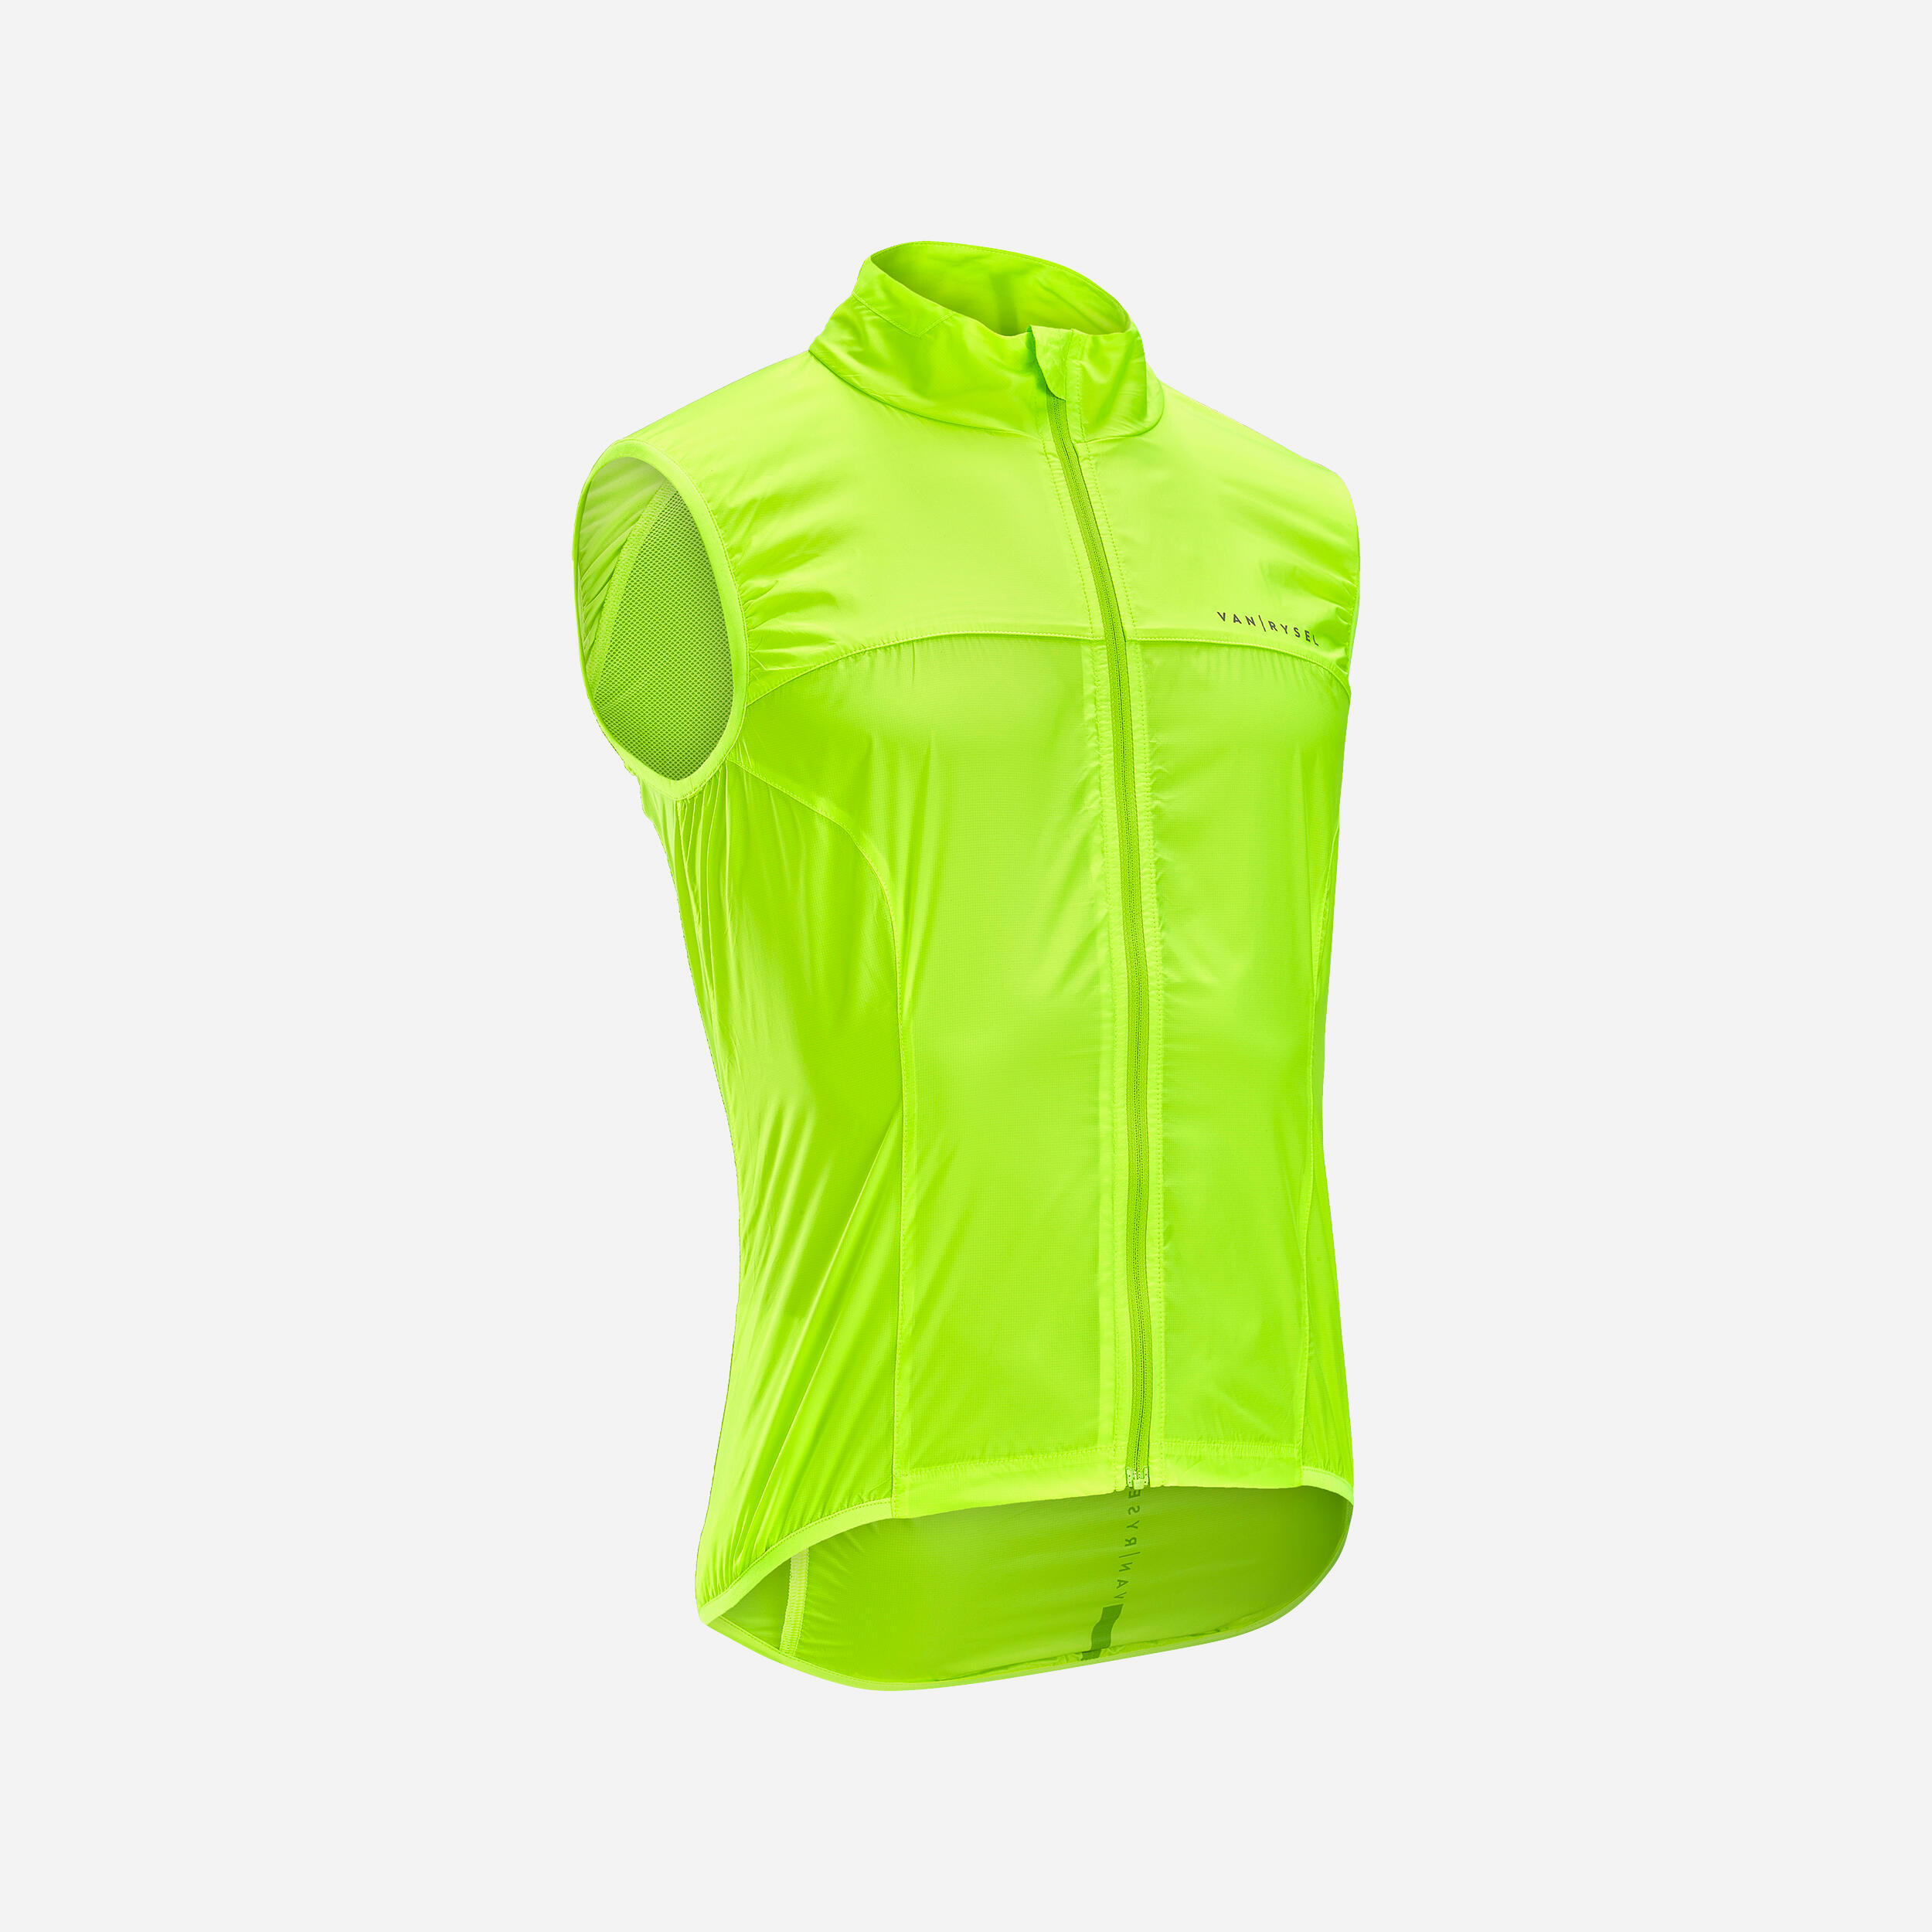 VAN RYSEL Men's Sleeveless Ultra-Light Road Cycling Windbreaker Racer - Yellow